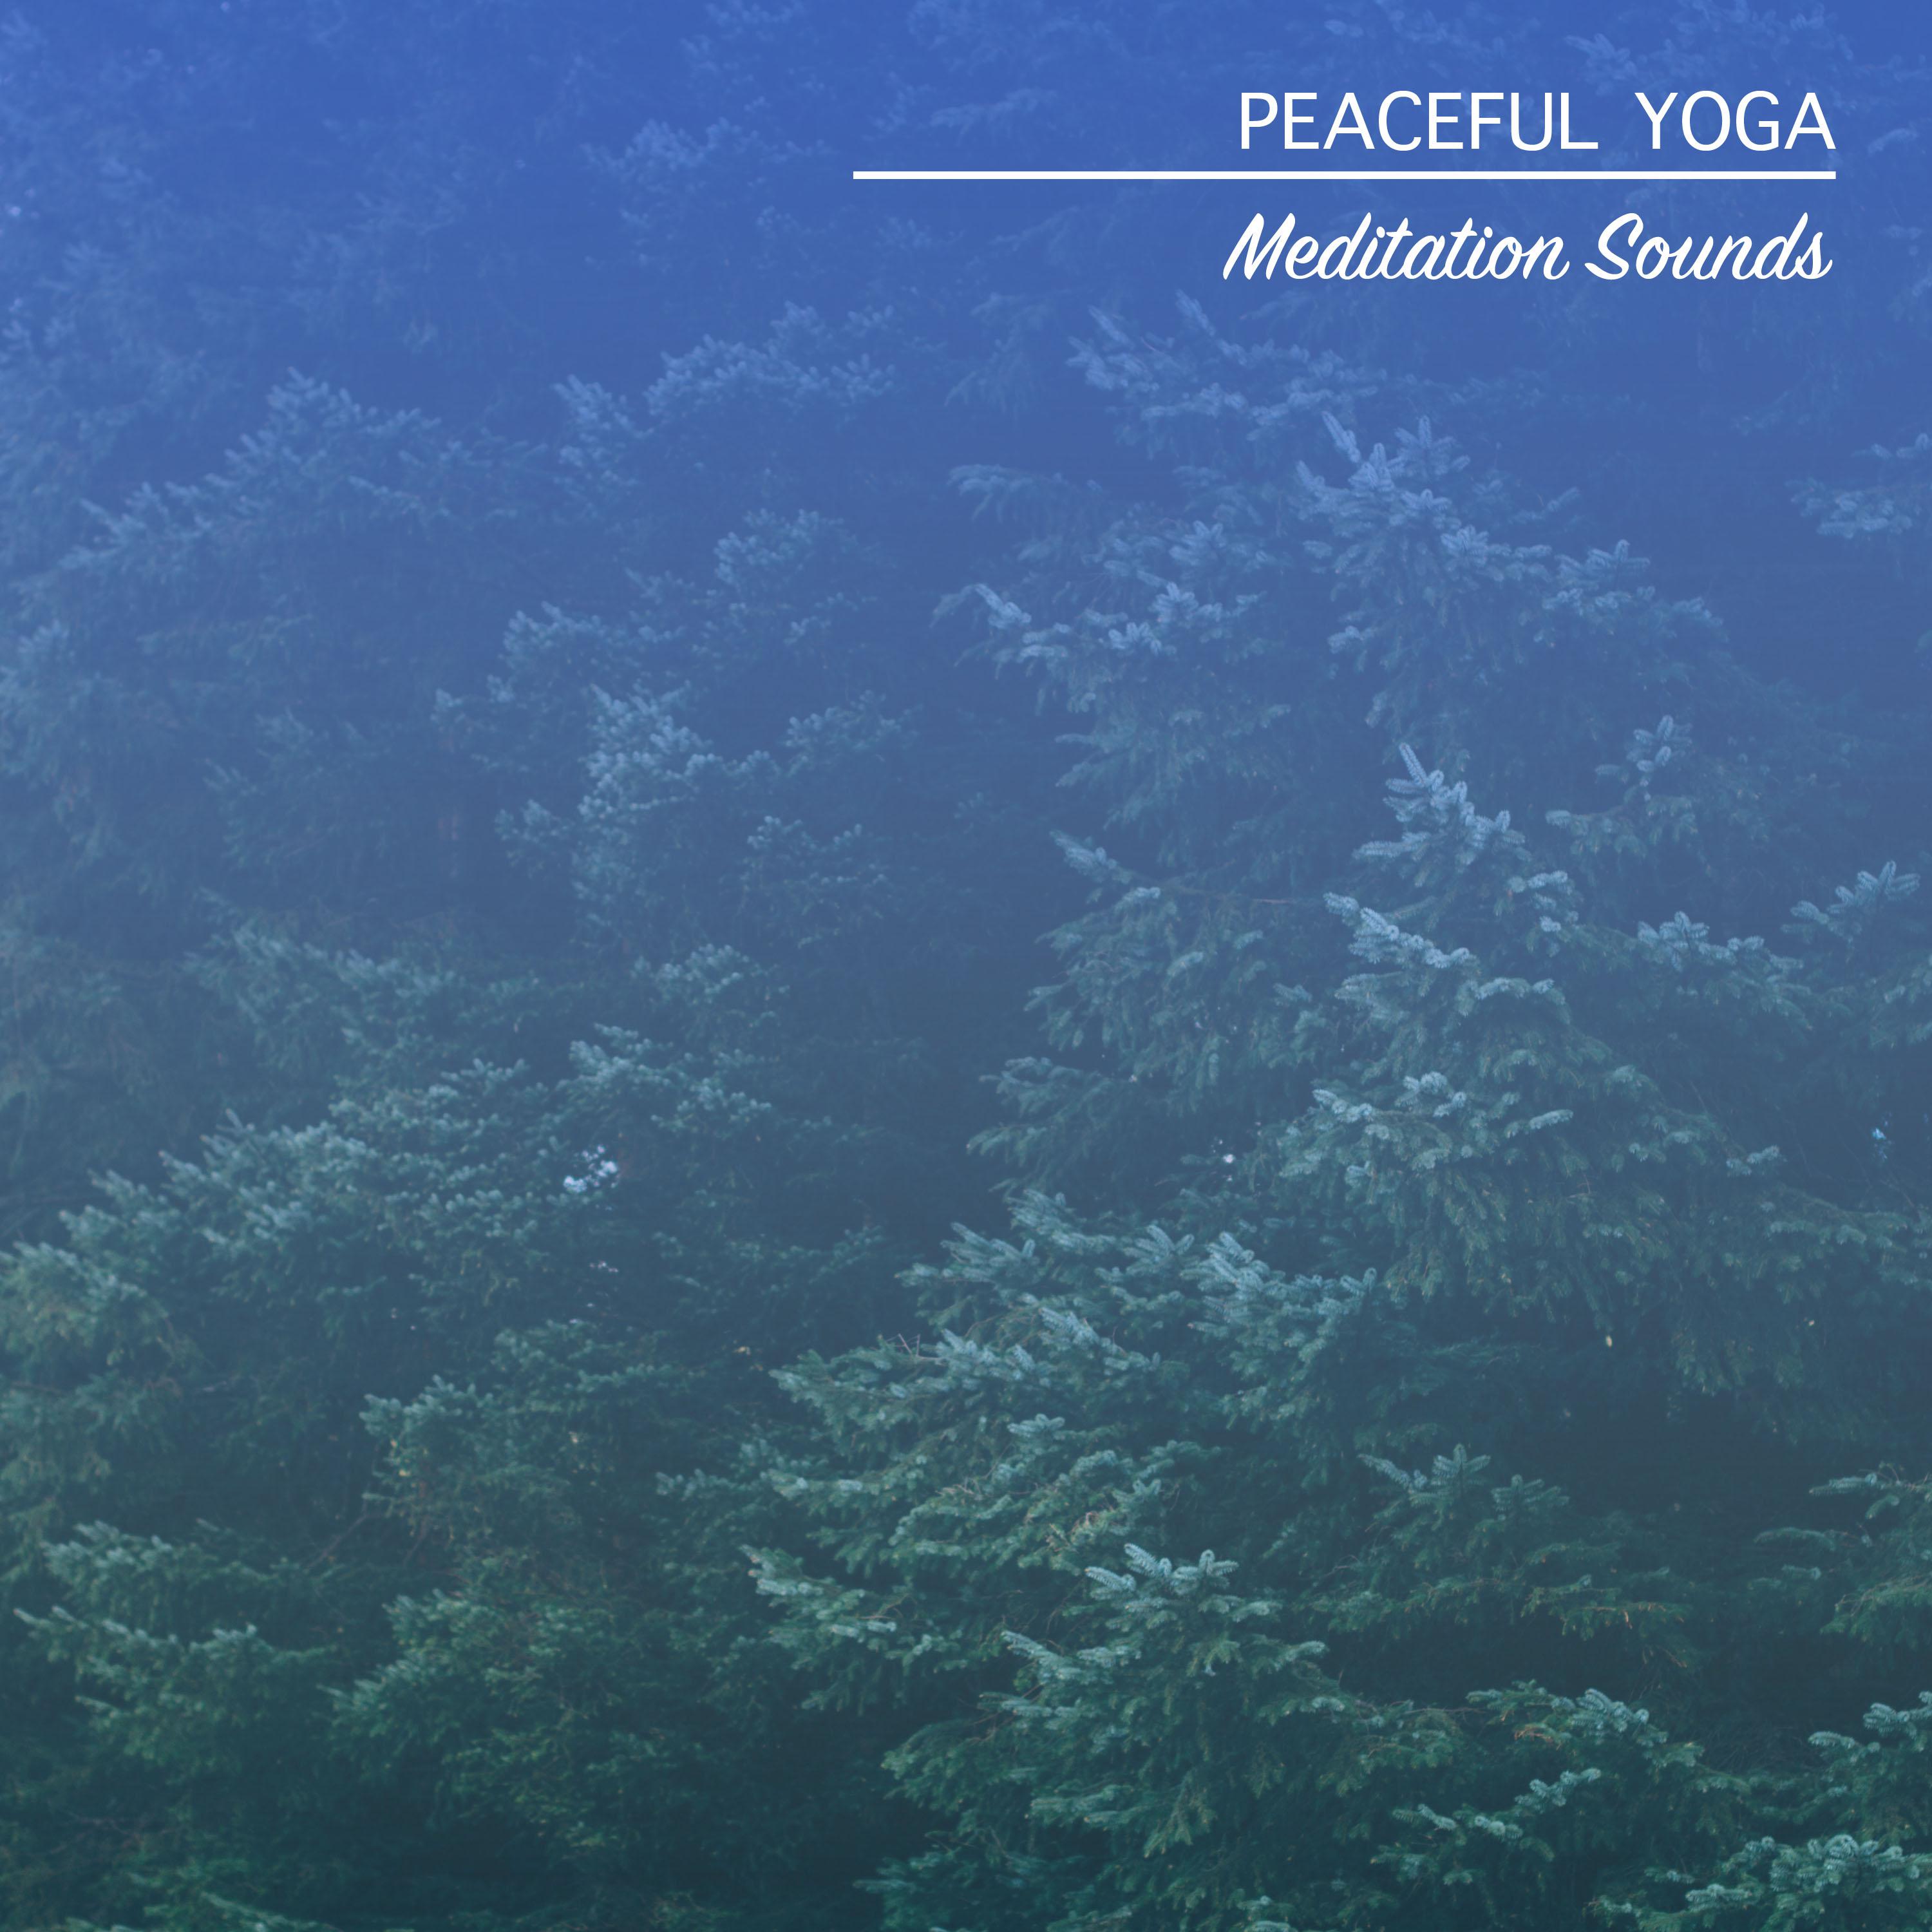 15 Peaceful Yoga and Meditation Sounds